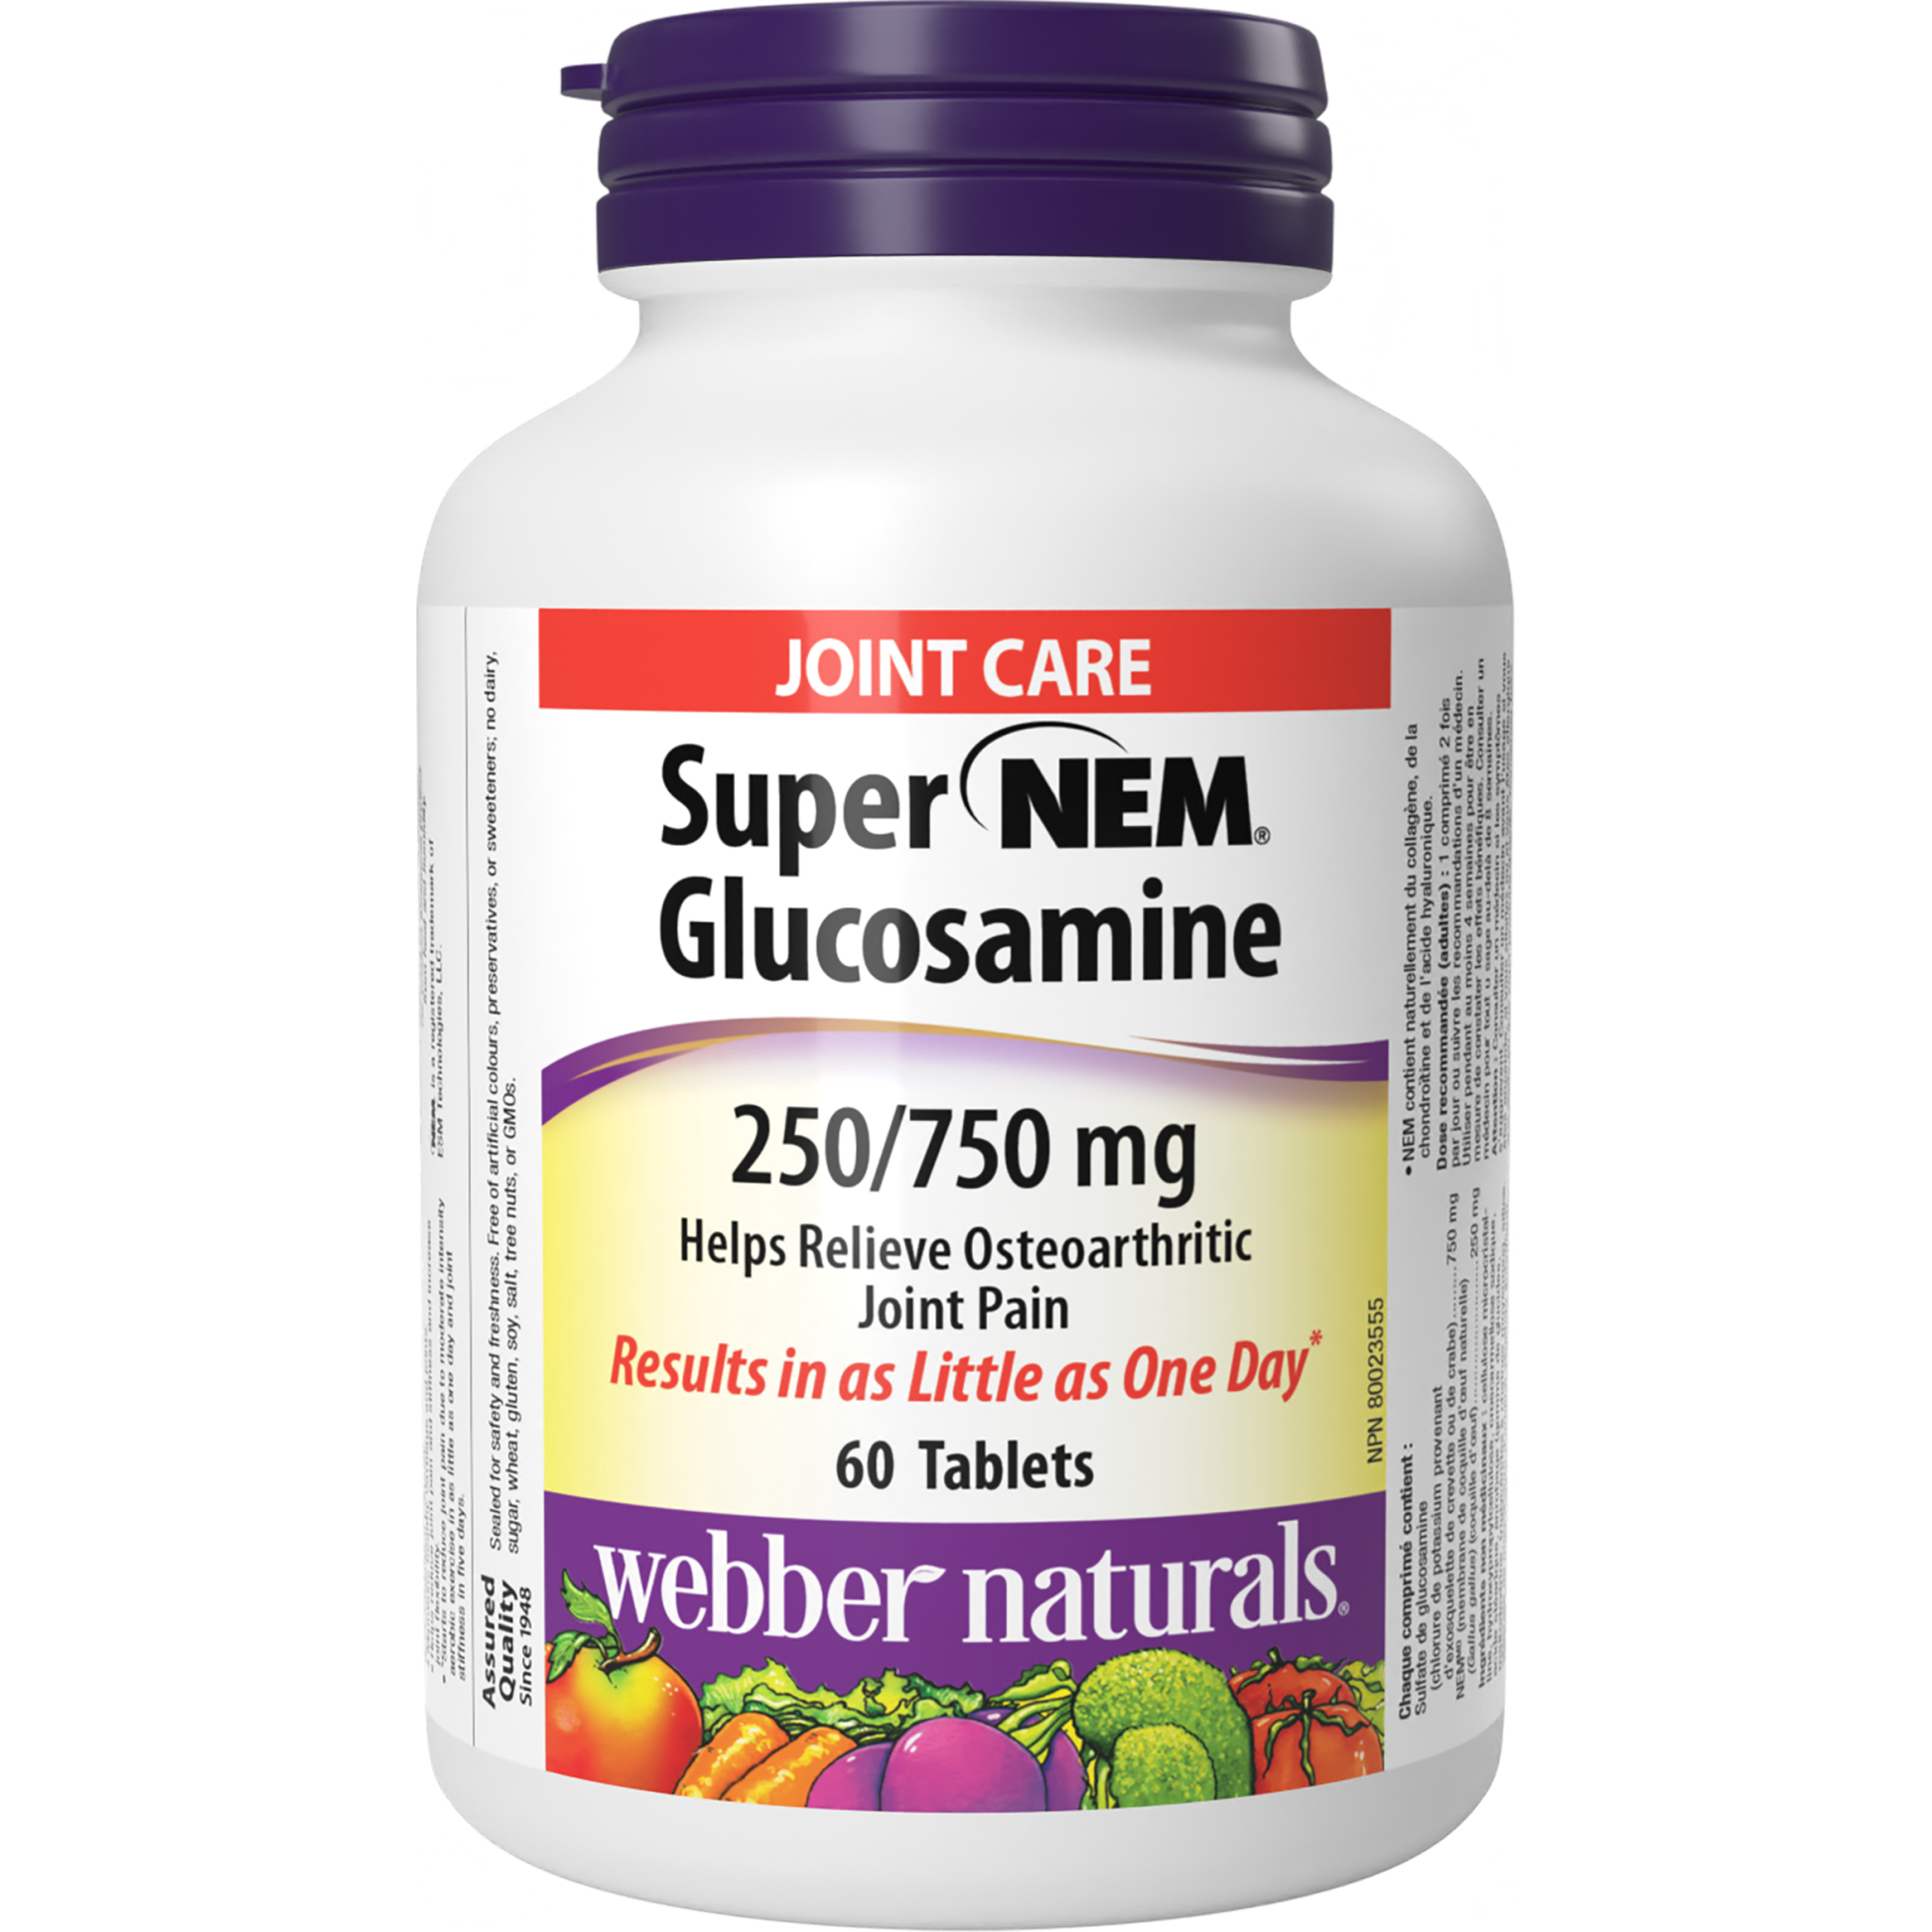 Super NEM® Glucosamine 250/750 mg for Webber Naturals|v|hi-res|WN3458